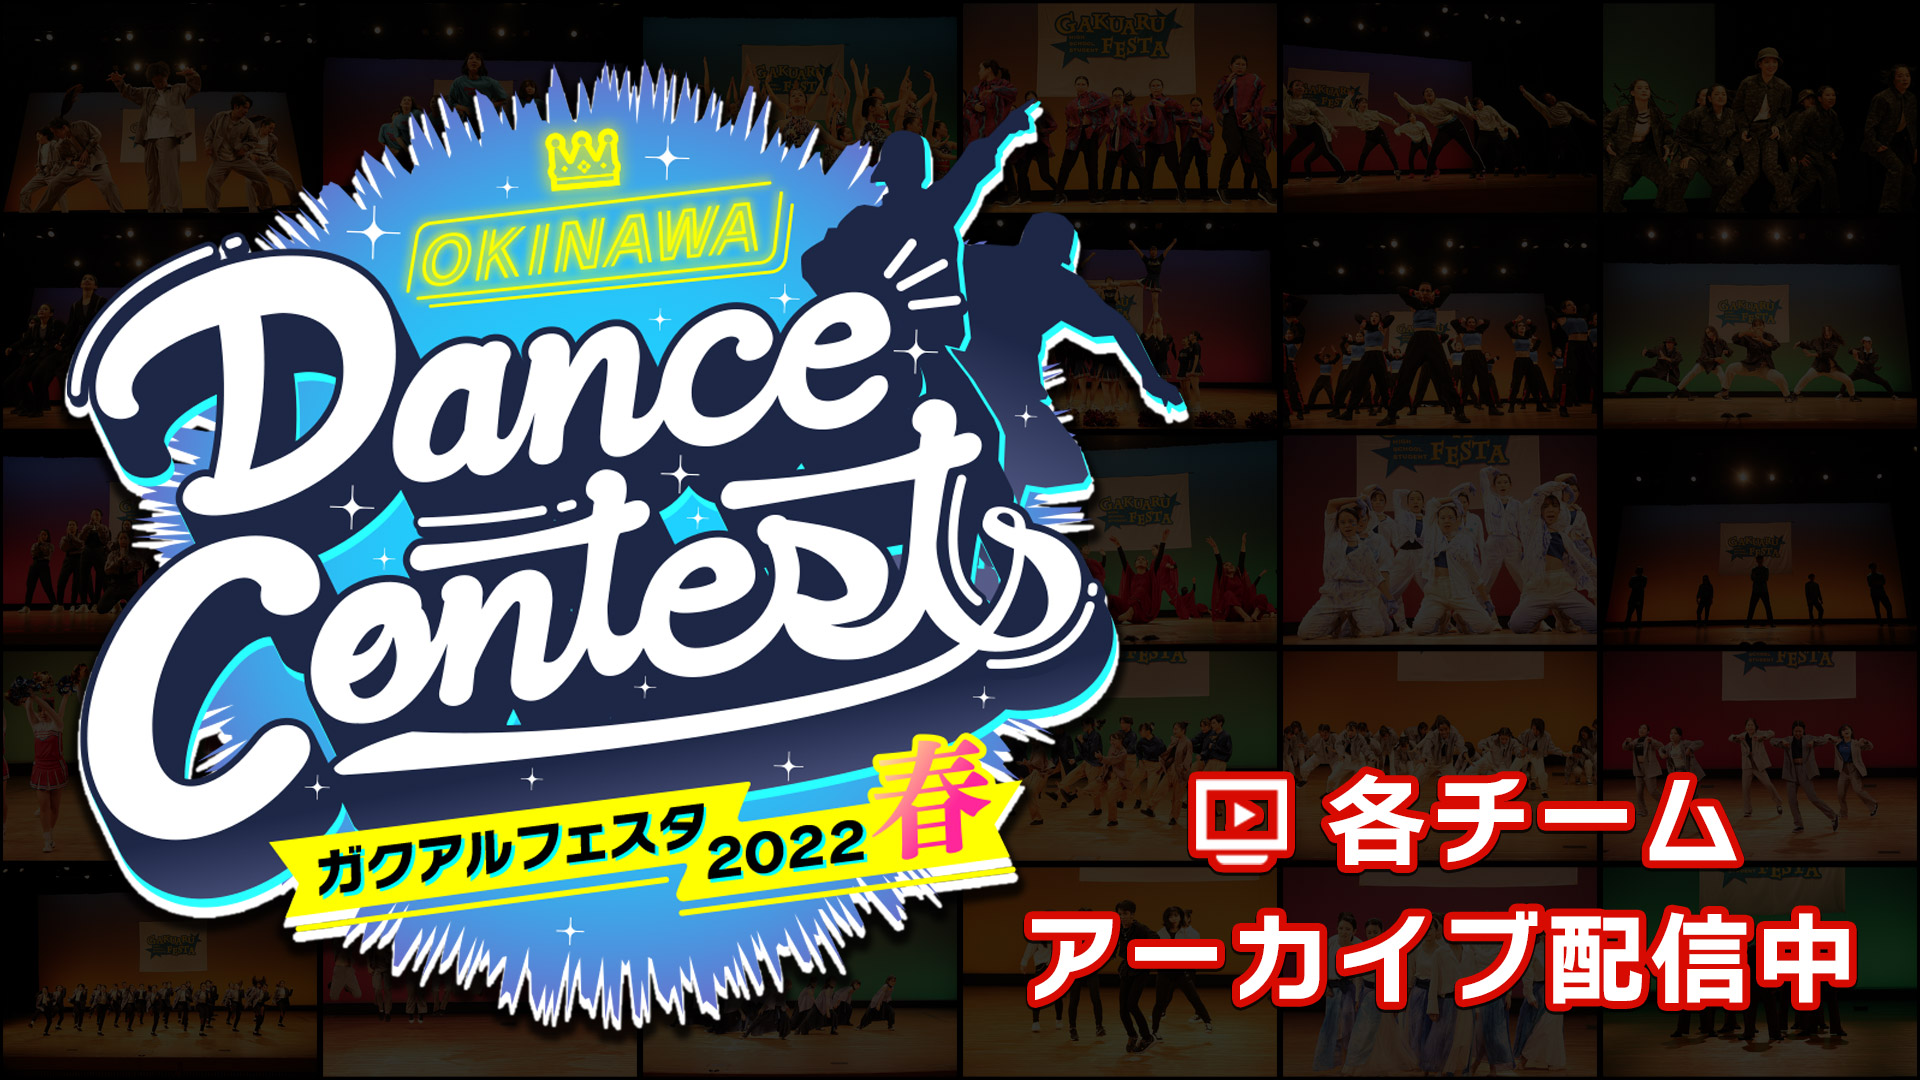 OKINAWA Dance Contests ガクアルフェスタ2022 春